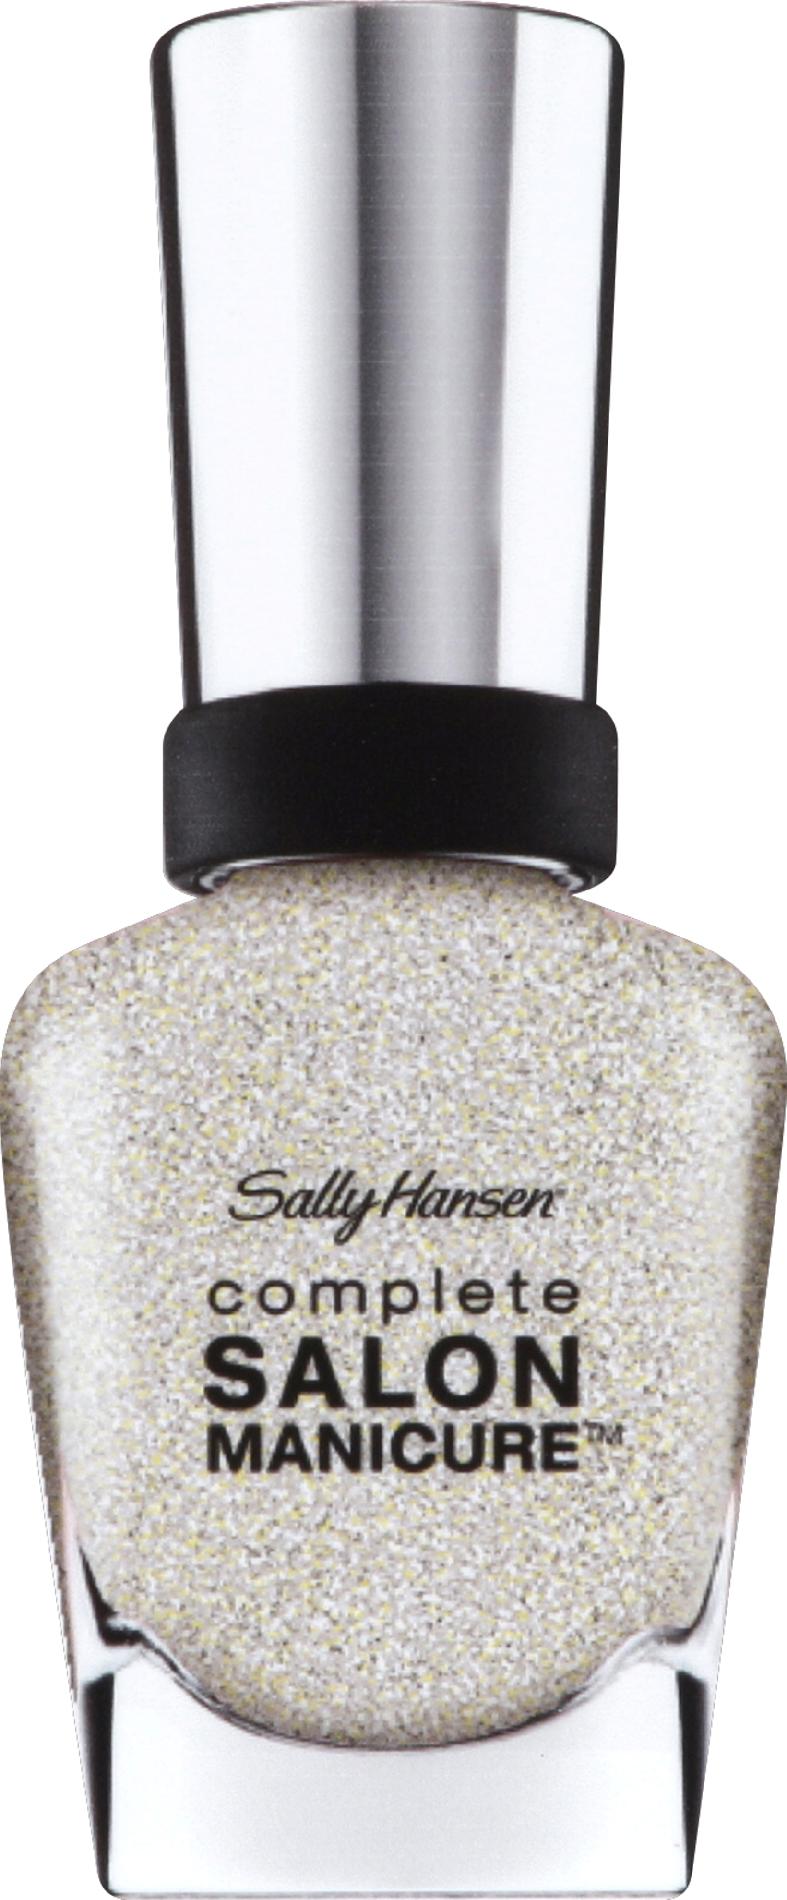 Sally Hansen Complete Salon Manicure Nail, Golden Rule, 0.5 oz, (14.7 ml)